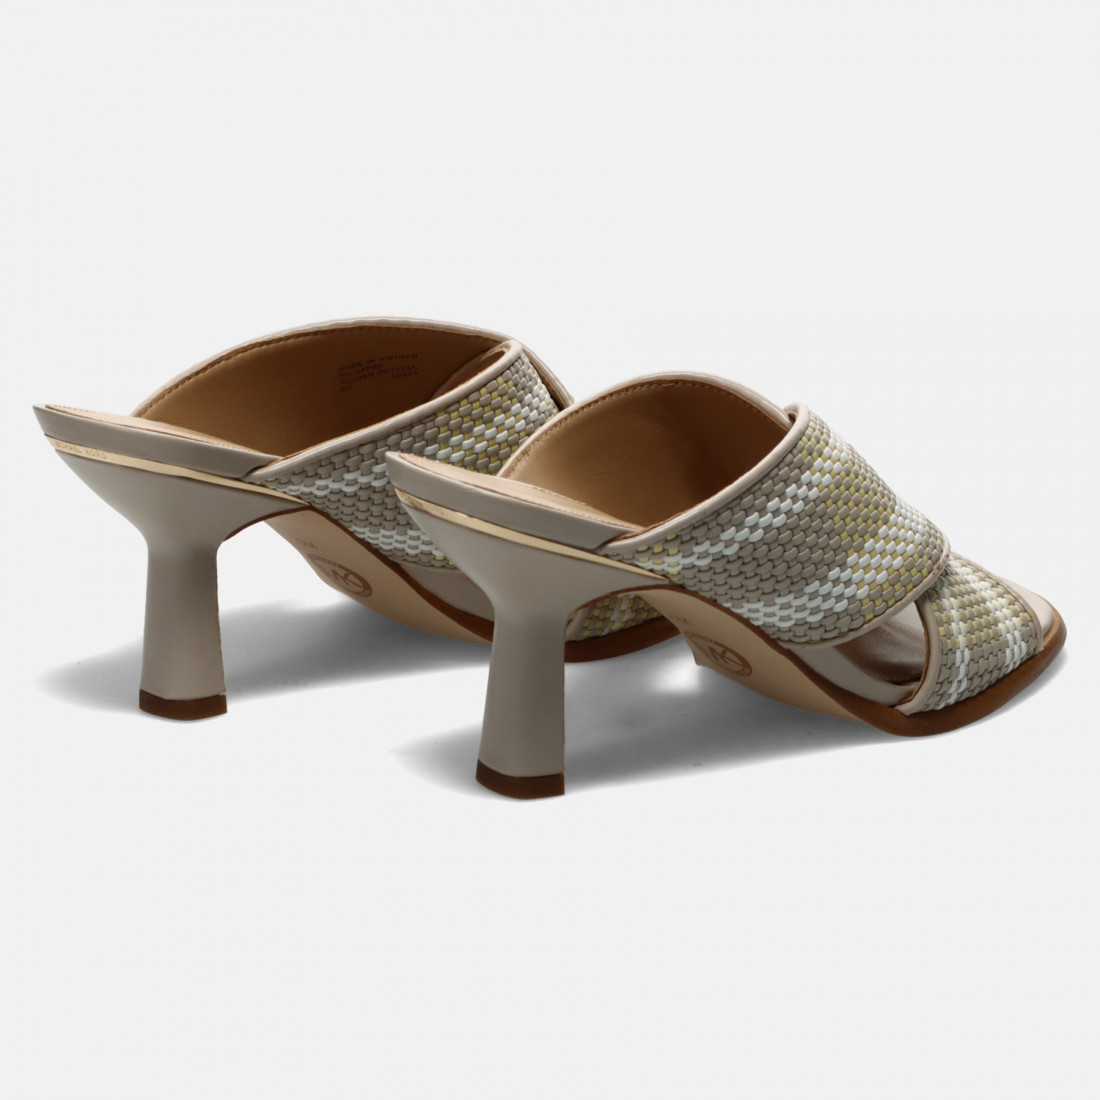 Michael Kors Gideon sand mules with medium heel